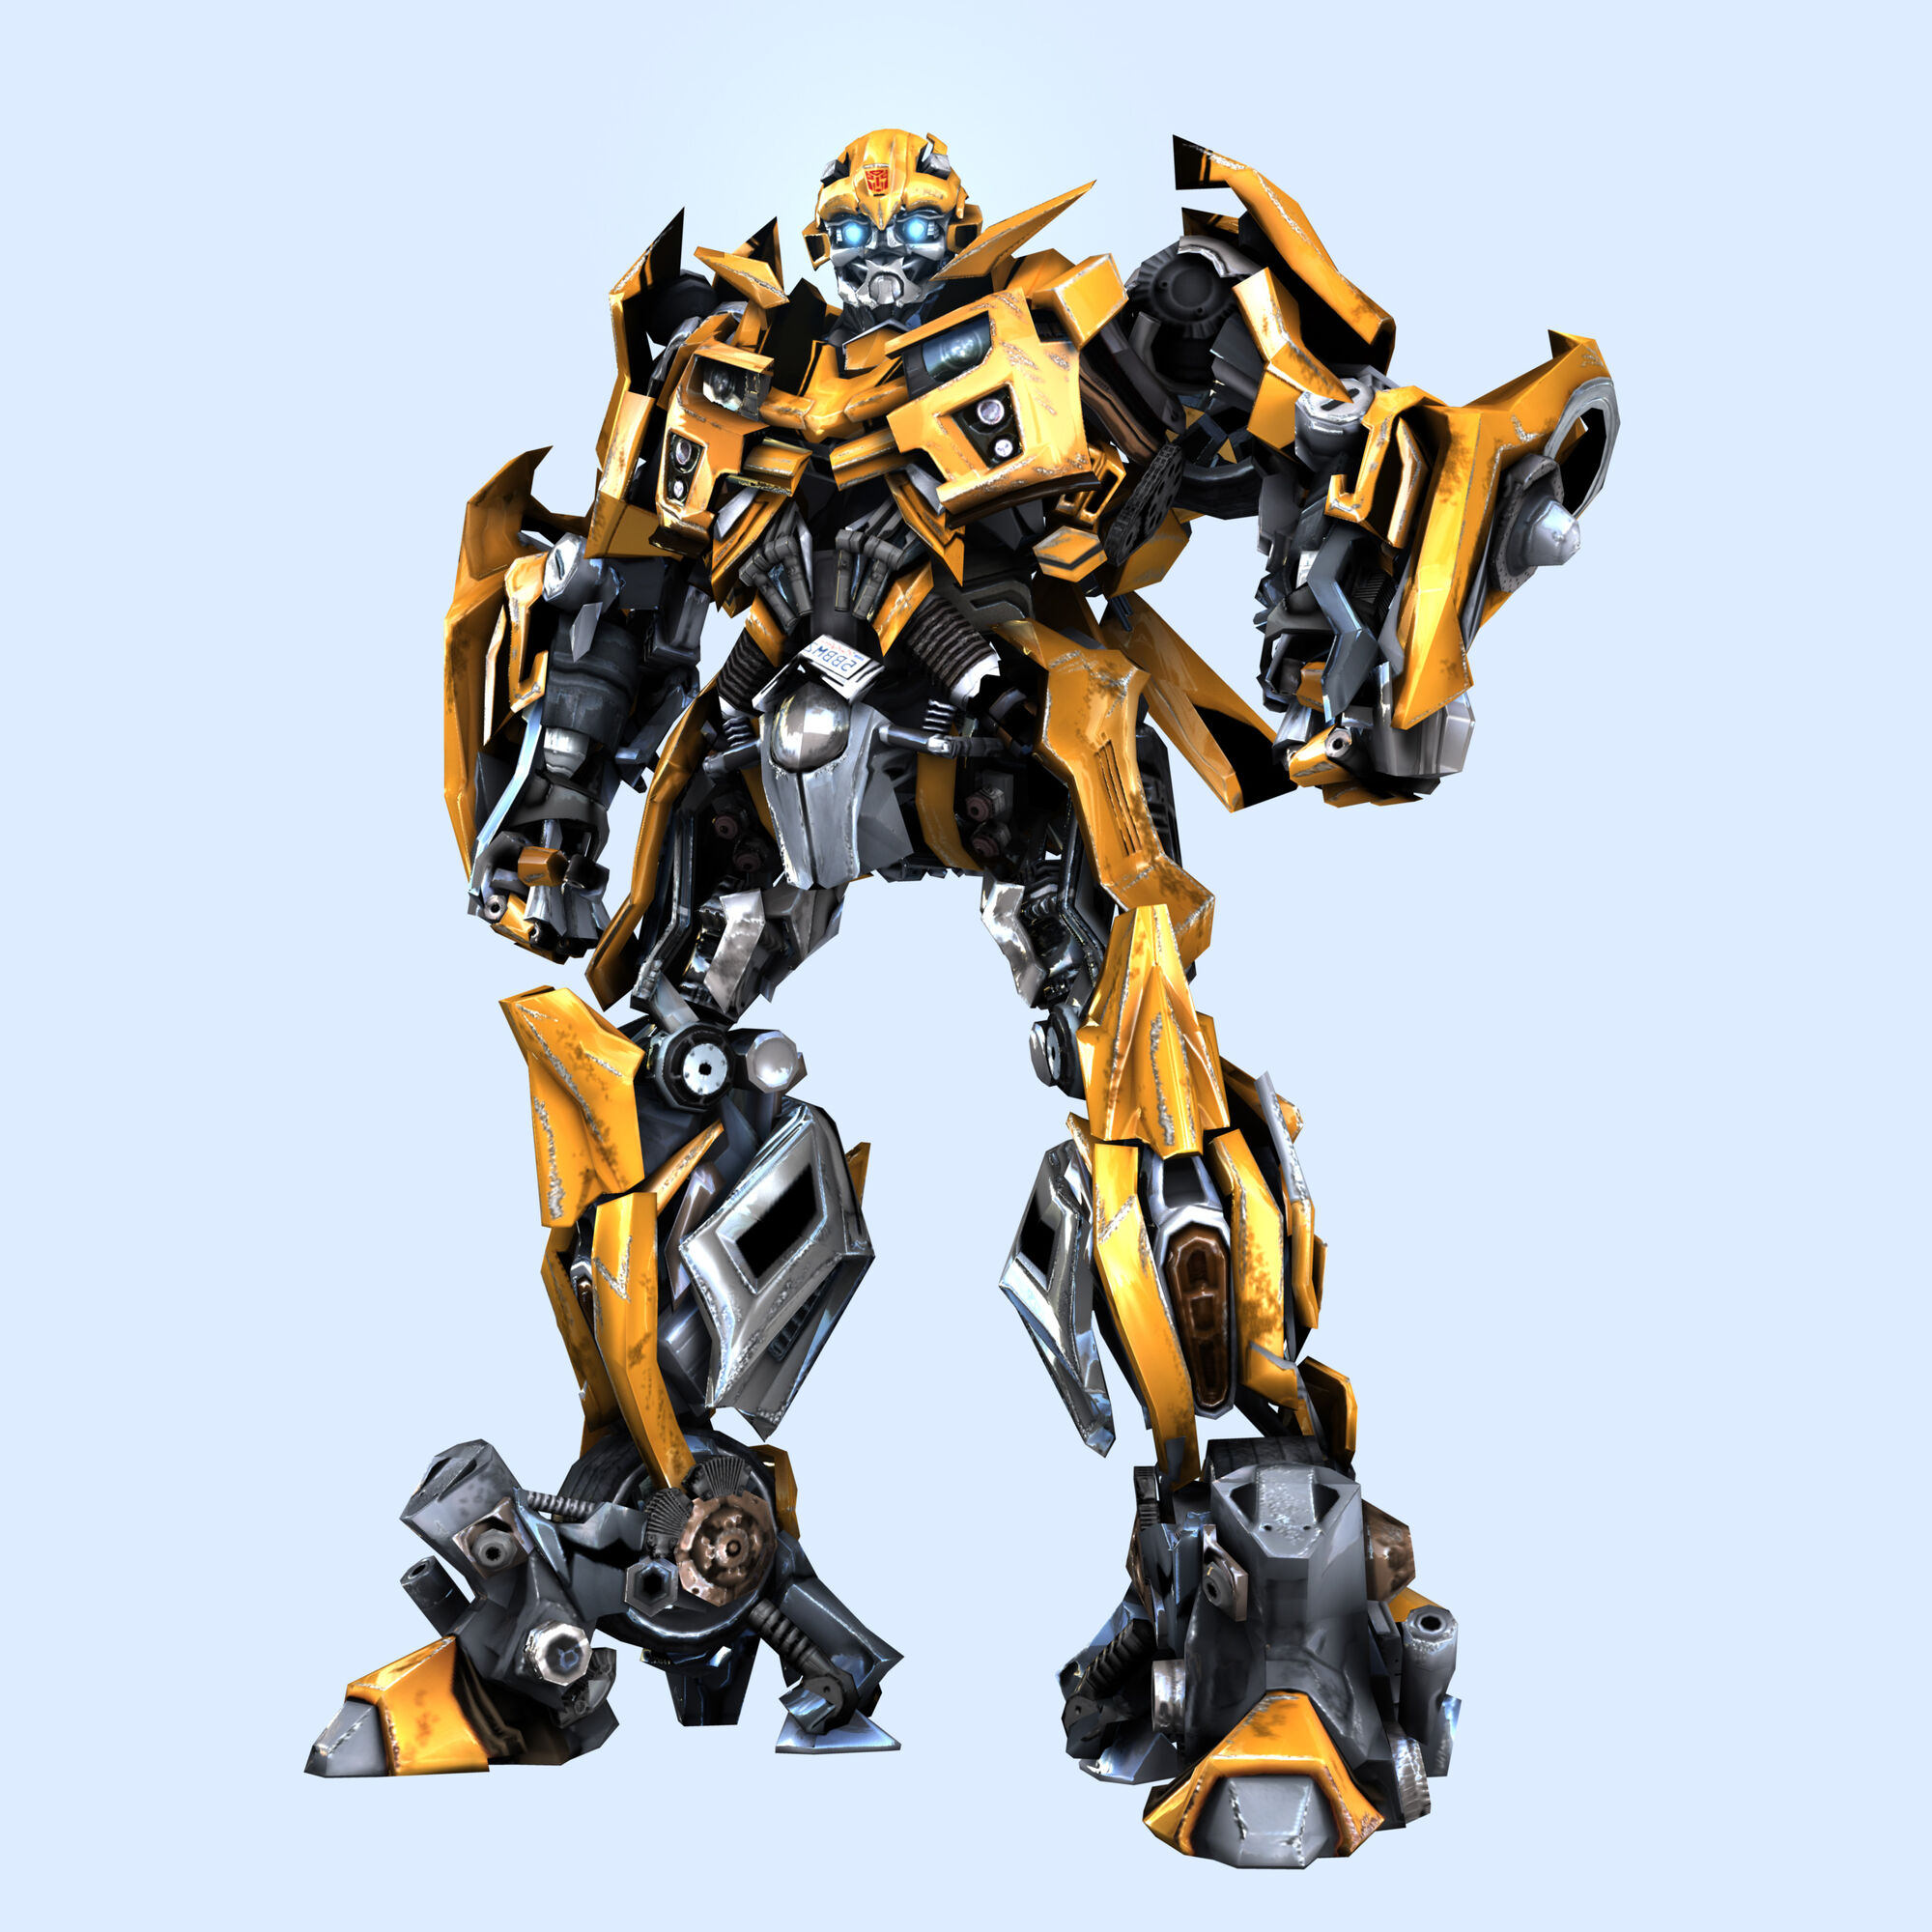 bumblebee-transformers-cinematic-universe-wiki-fandom-powered-by-wikia